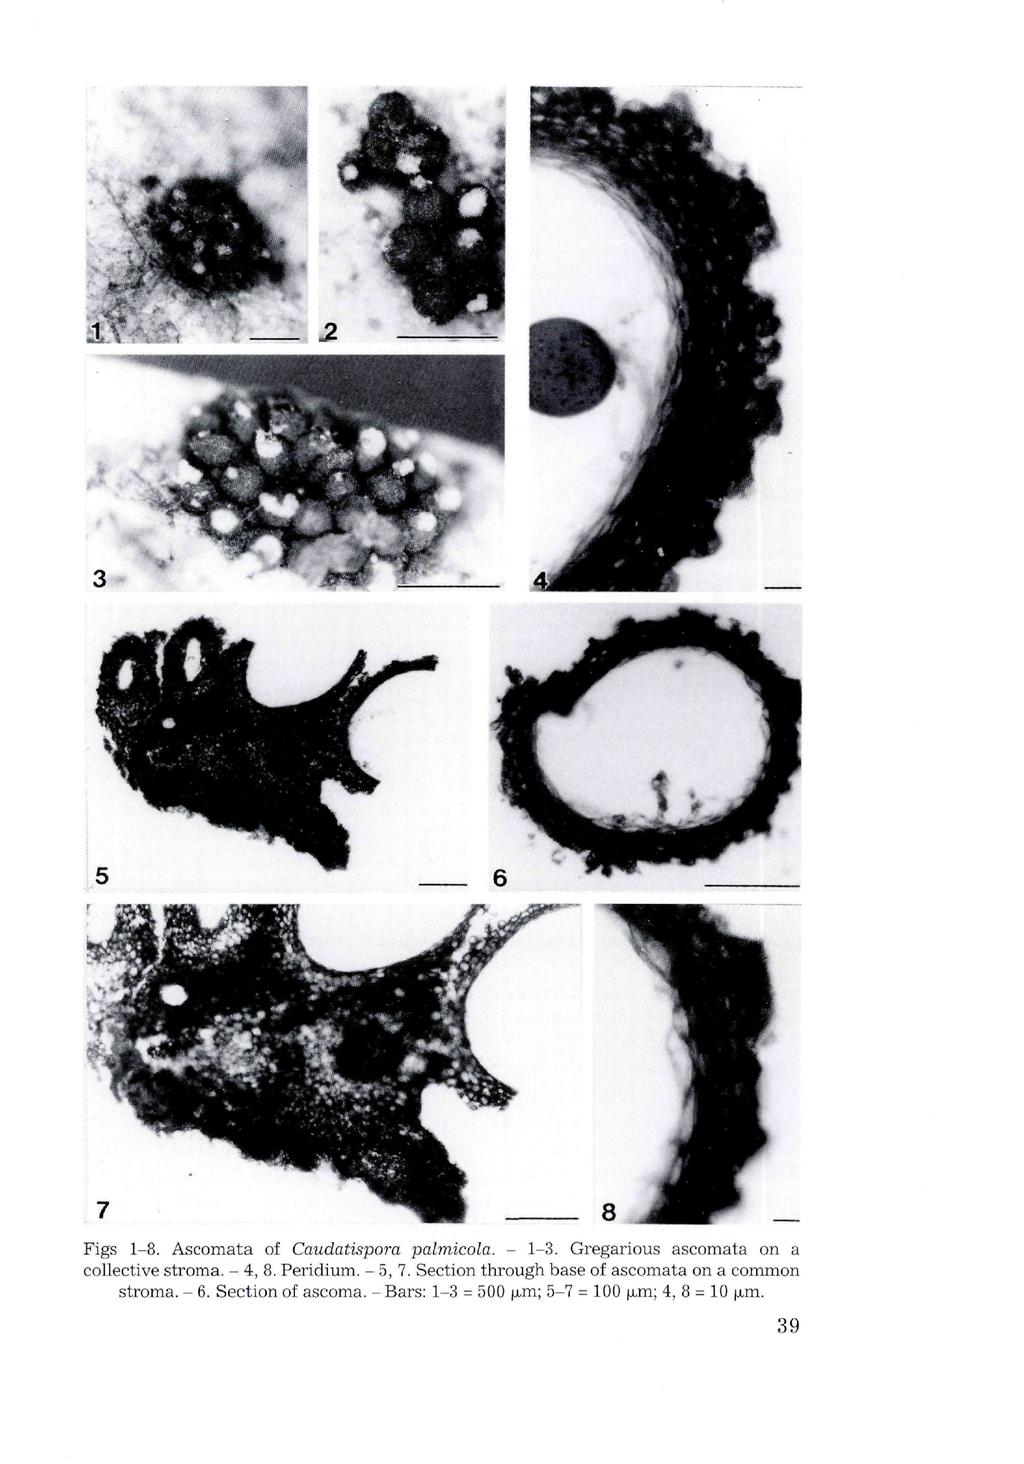 Figs 1-8. Ascomata of Caudatispora palmicola. - 1-3. Gregarious ascomata on a collective stroma. - 4, 8. Peridium. - 5, 7.